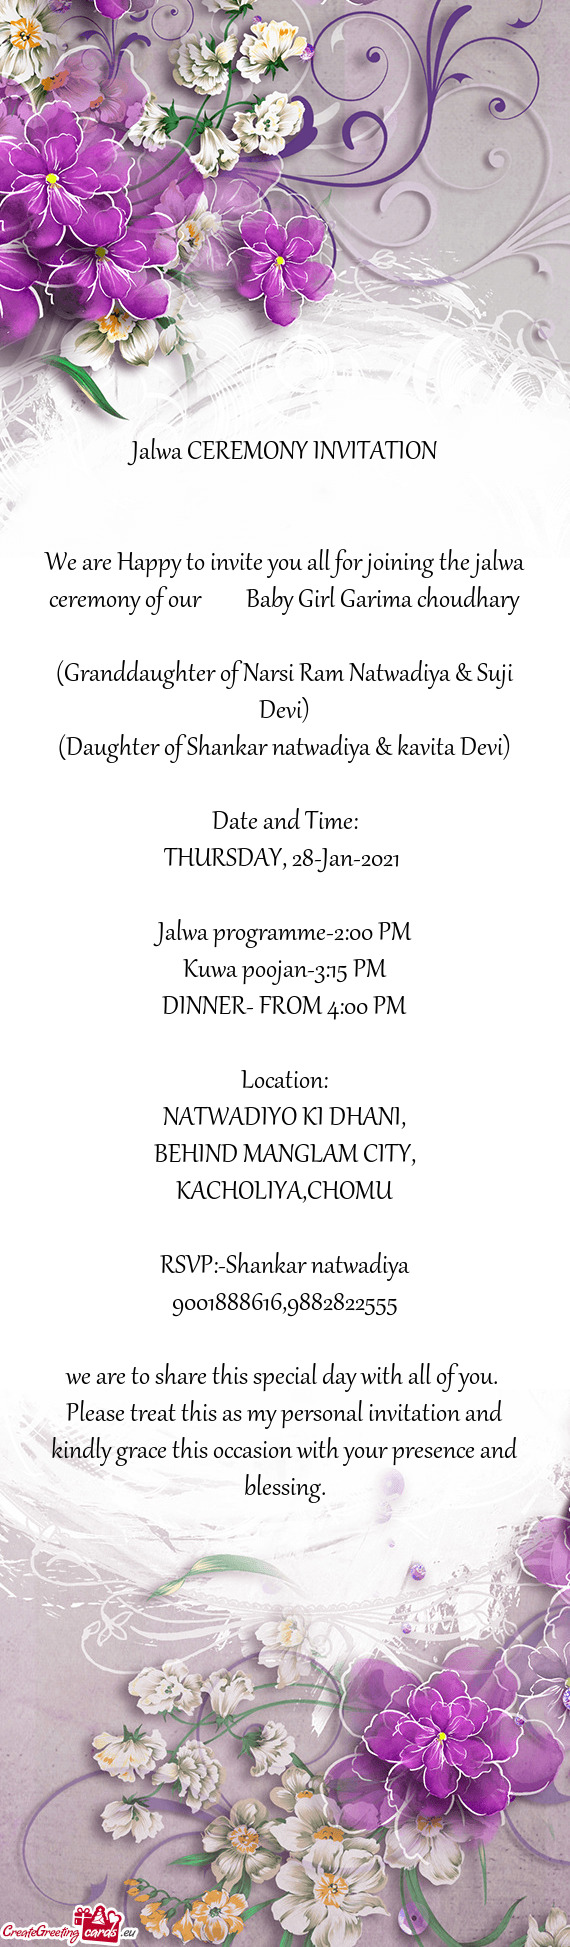 (Daughter of Shankar natwadiya & kavita Devi)